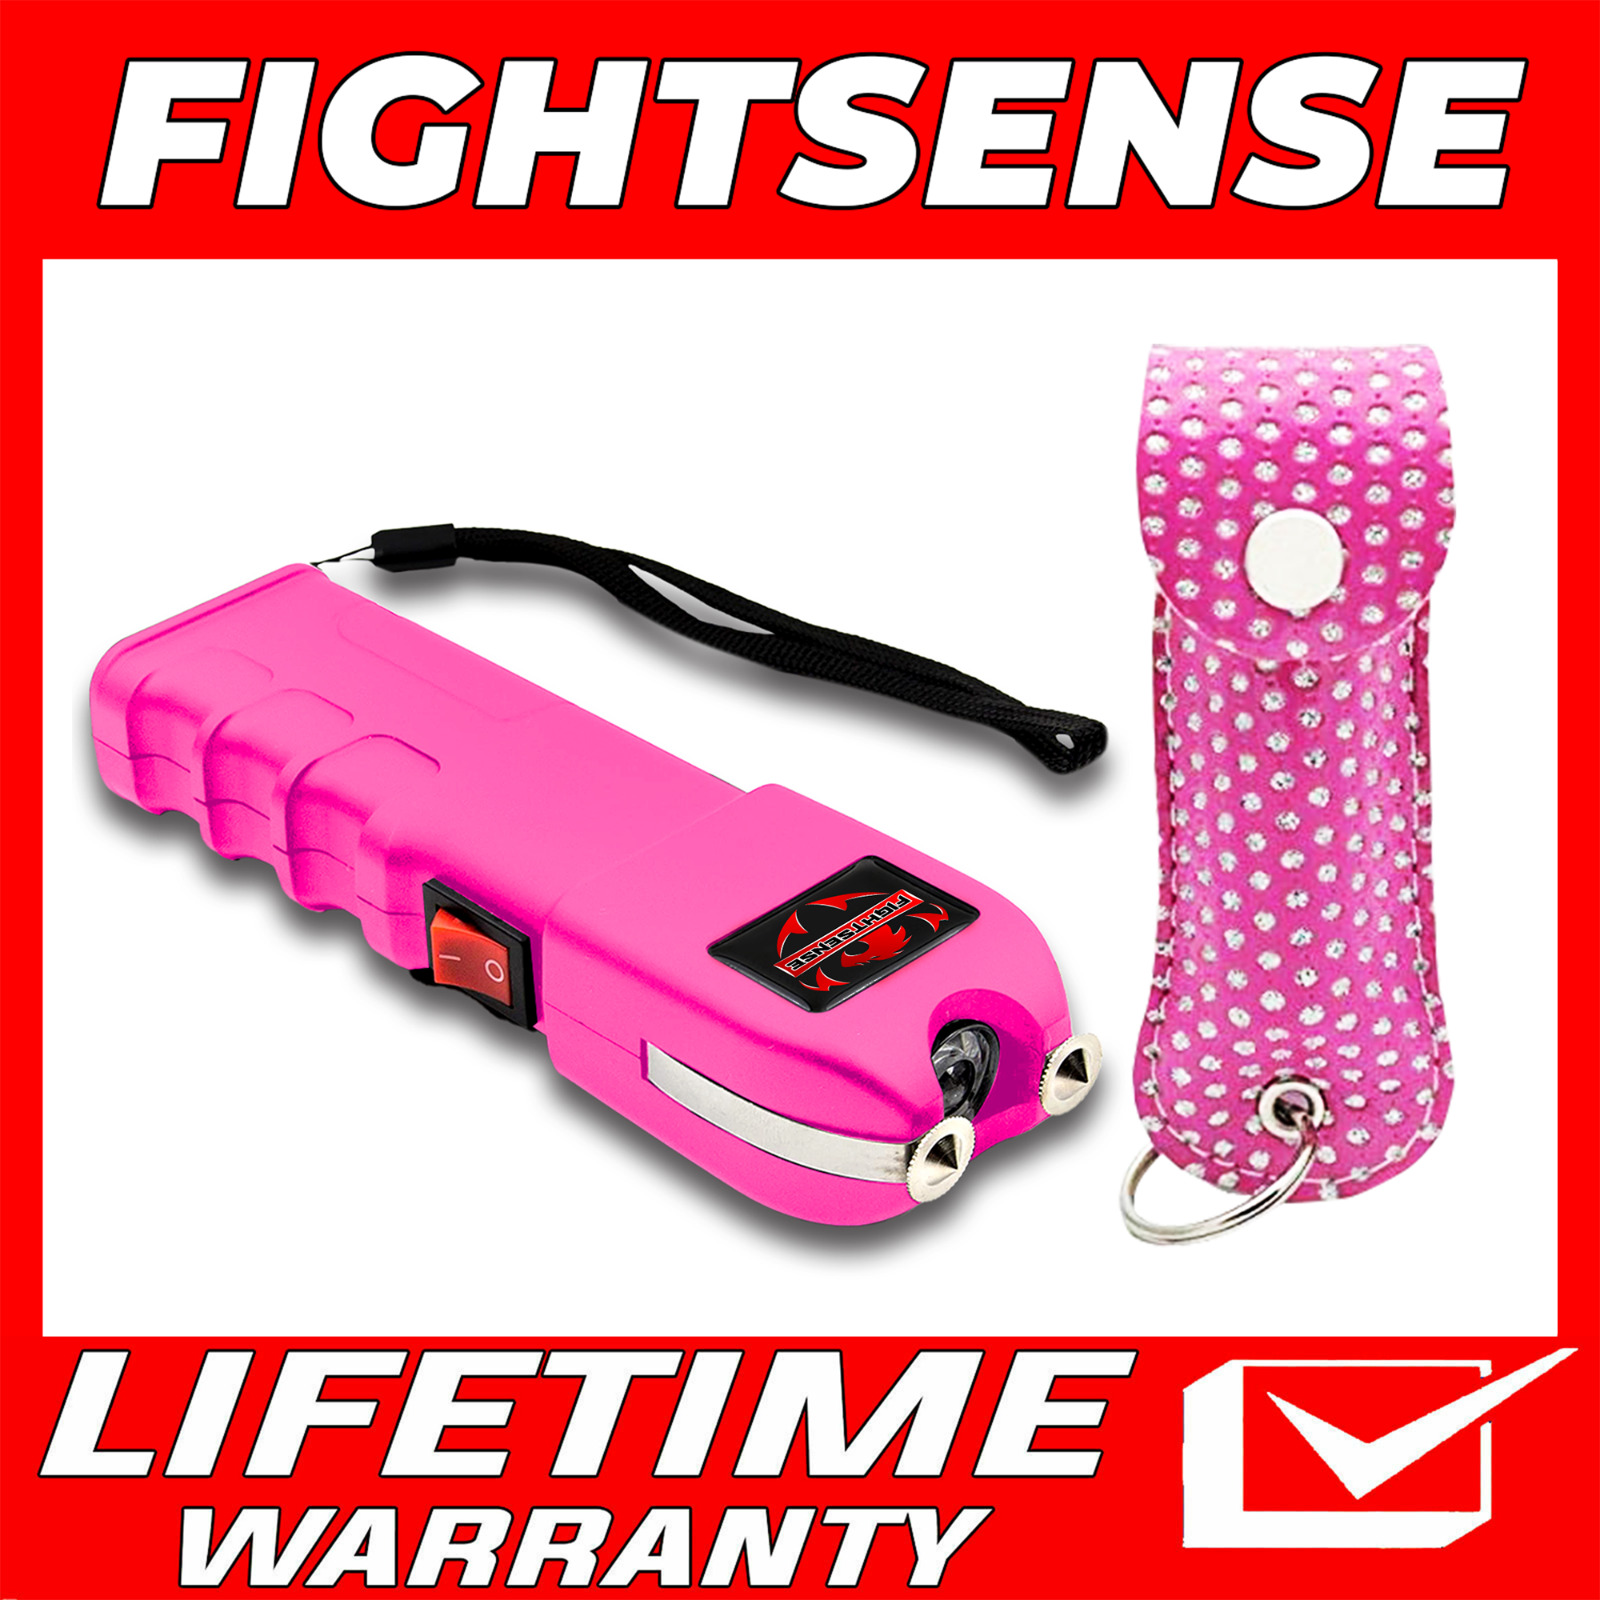 FIGHTSENSE Heavy Duty StunGun with LED FLASHLIGHT &Pepper Spray for Self Defense